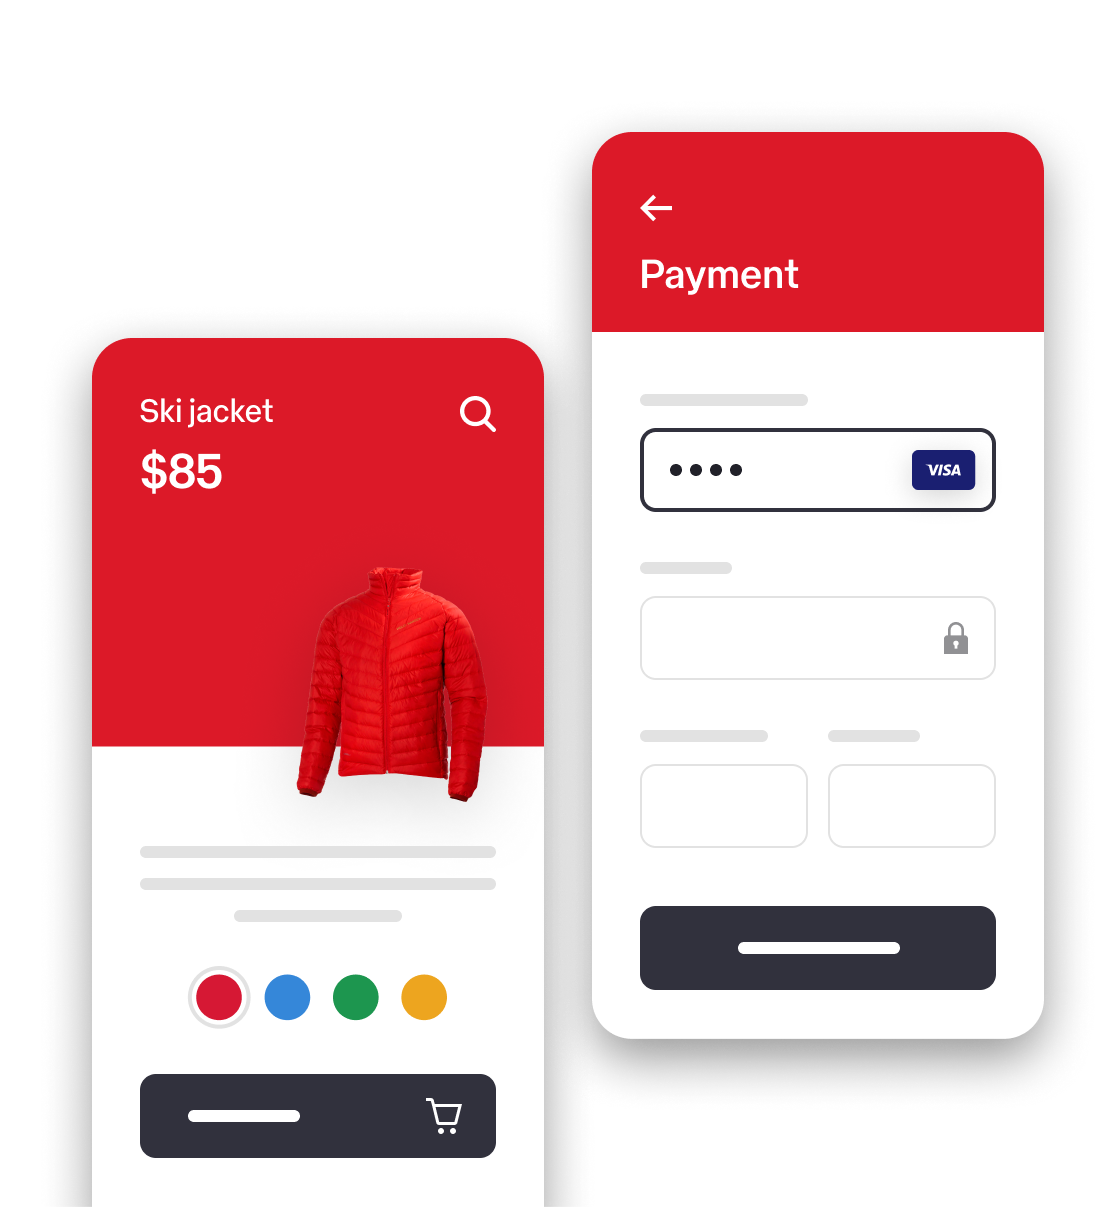 Accept receive secure online payment Australia - Online payment ecommerce transactions